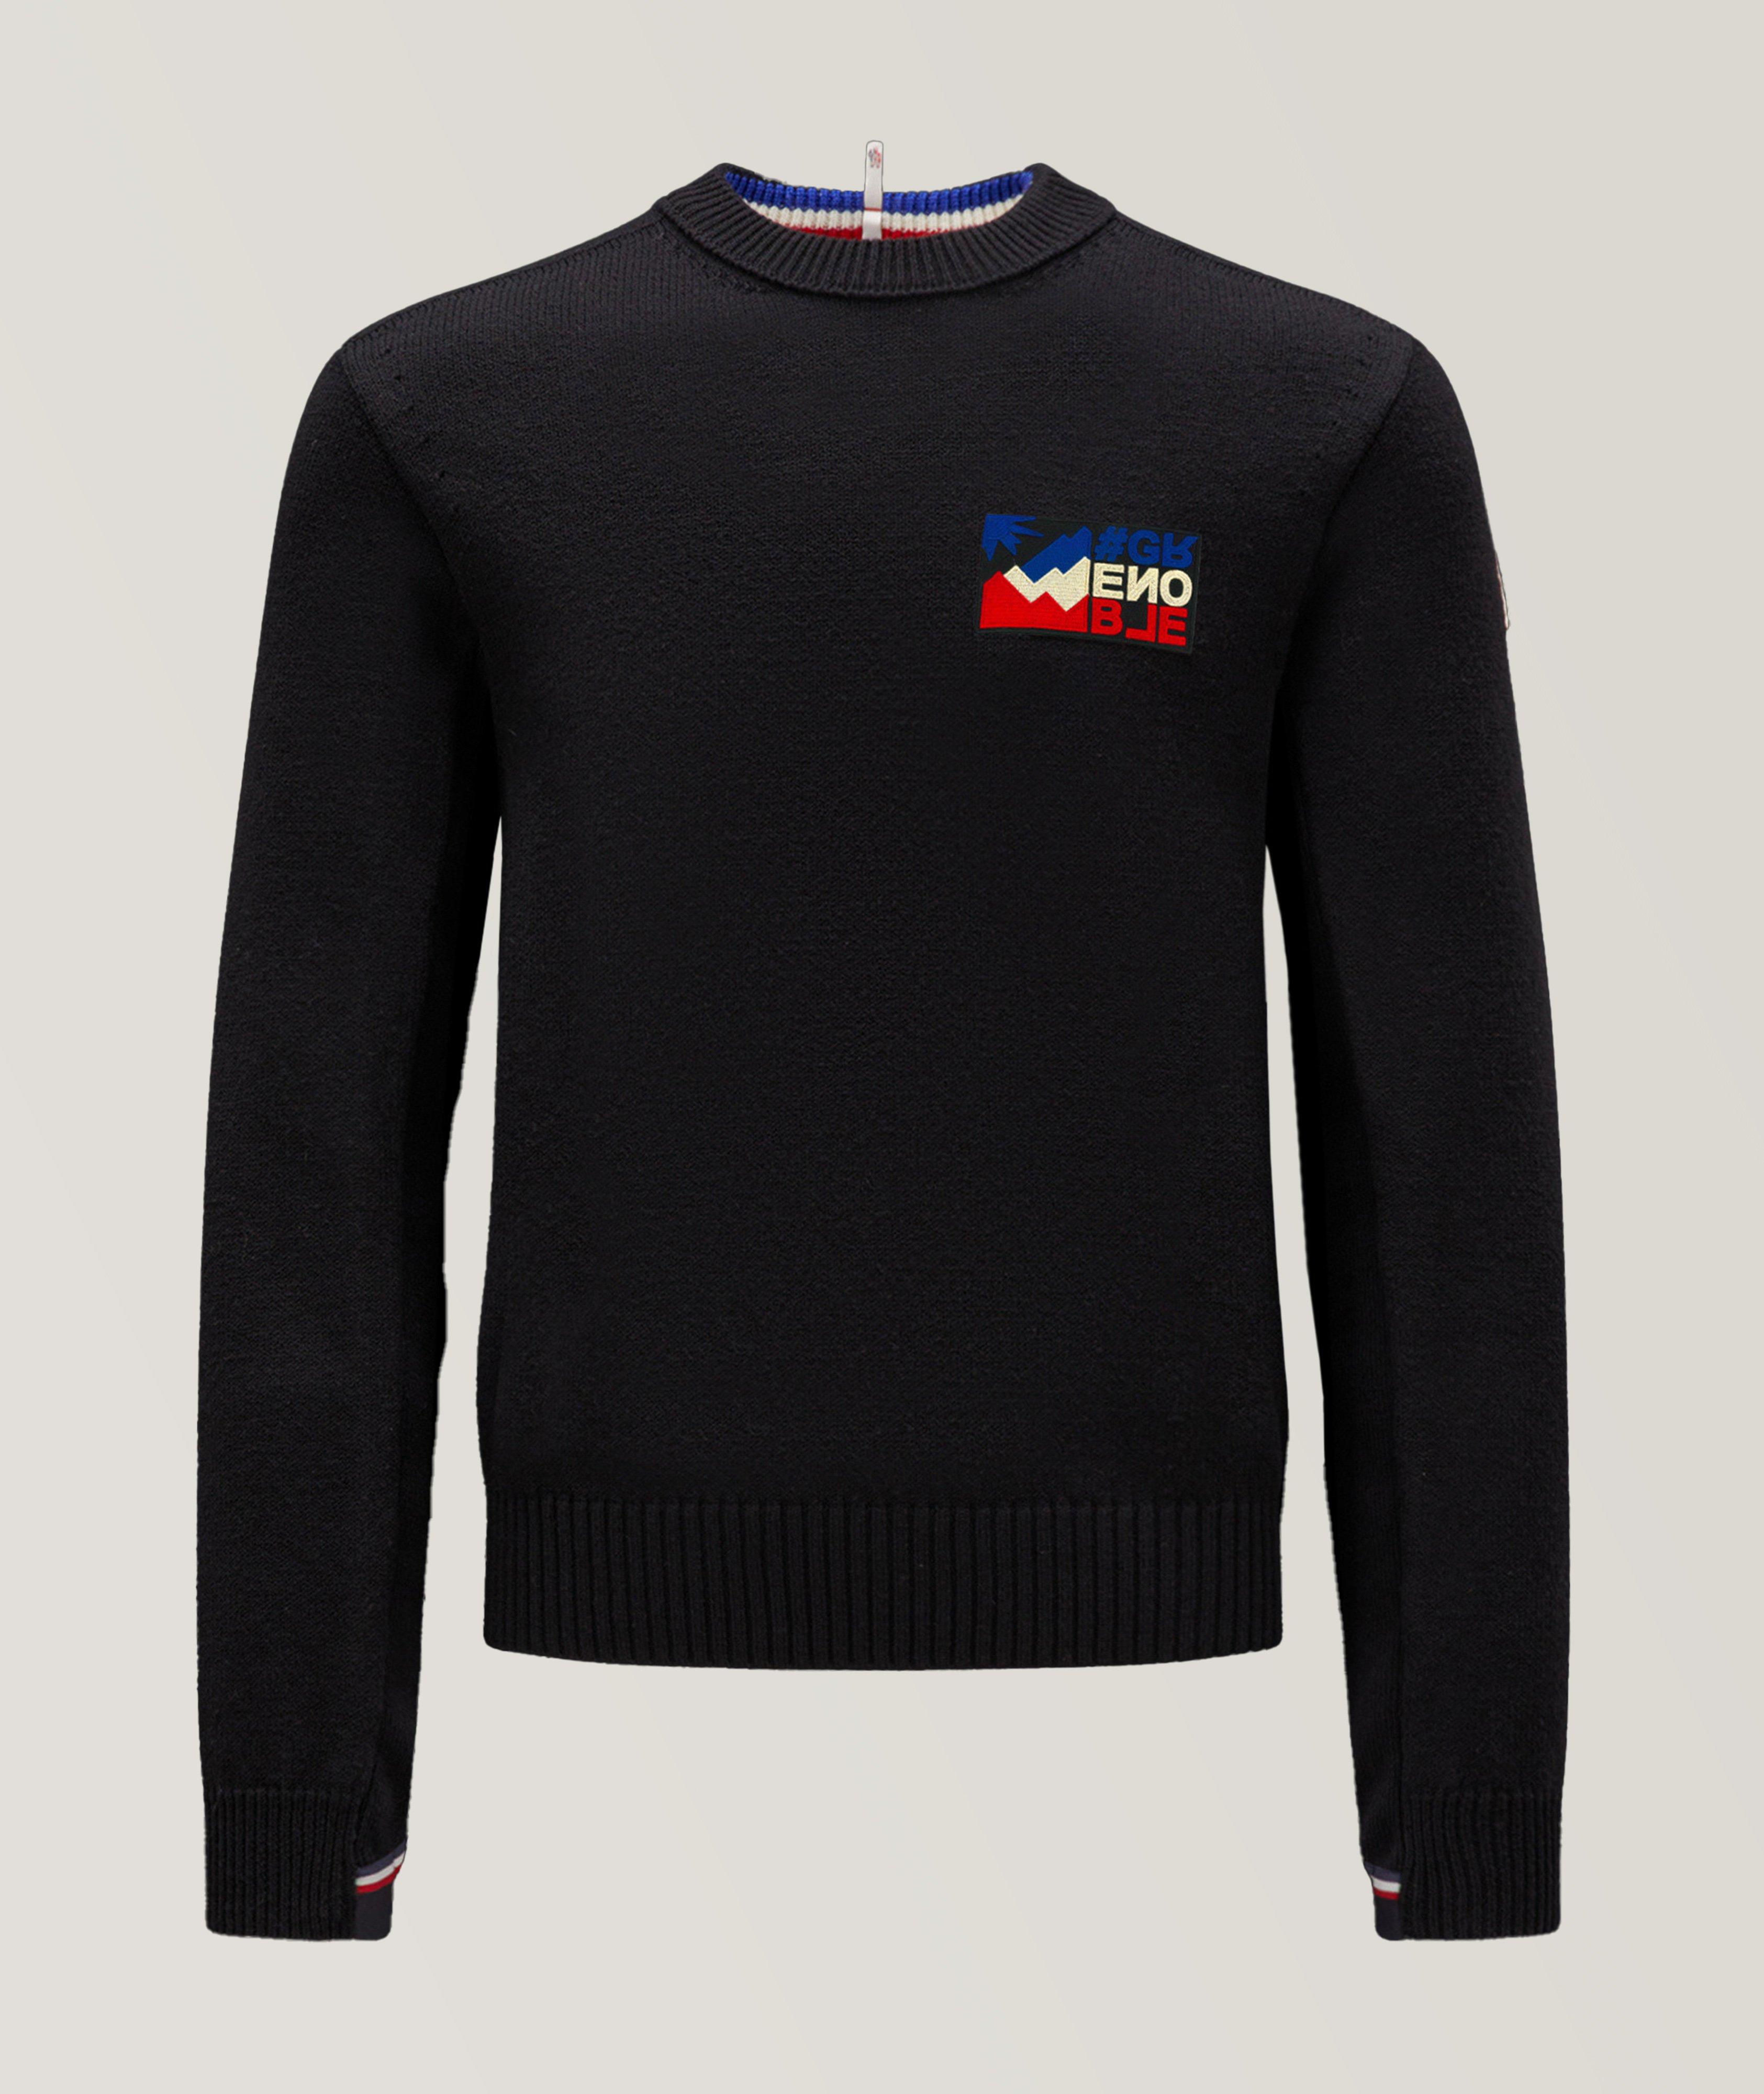 Grenoble Wool Crewneck Sweater image 0